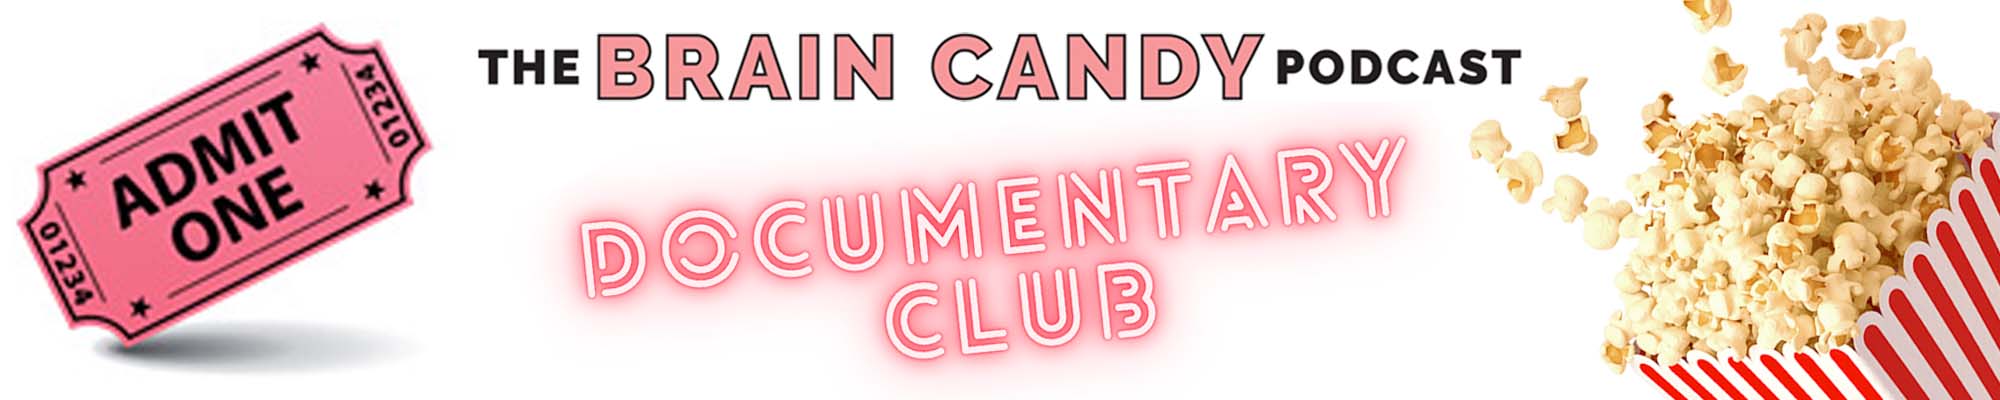 Brain Candy Podcast Documentary Club